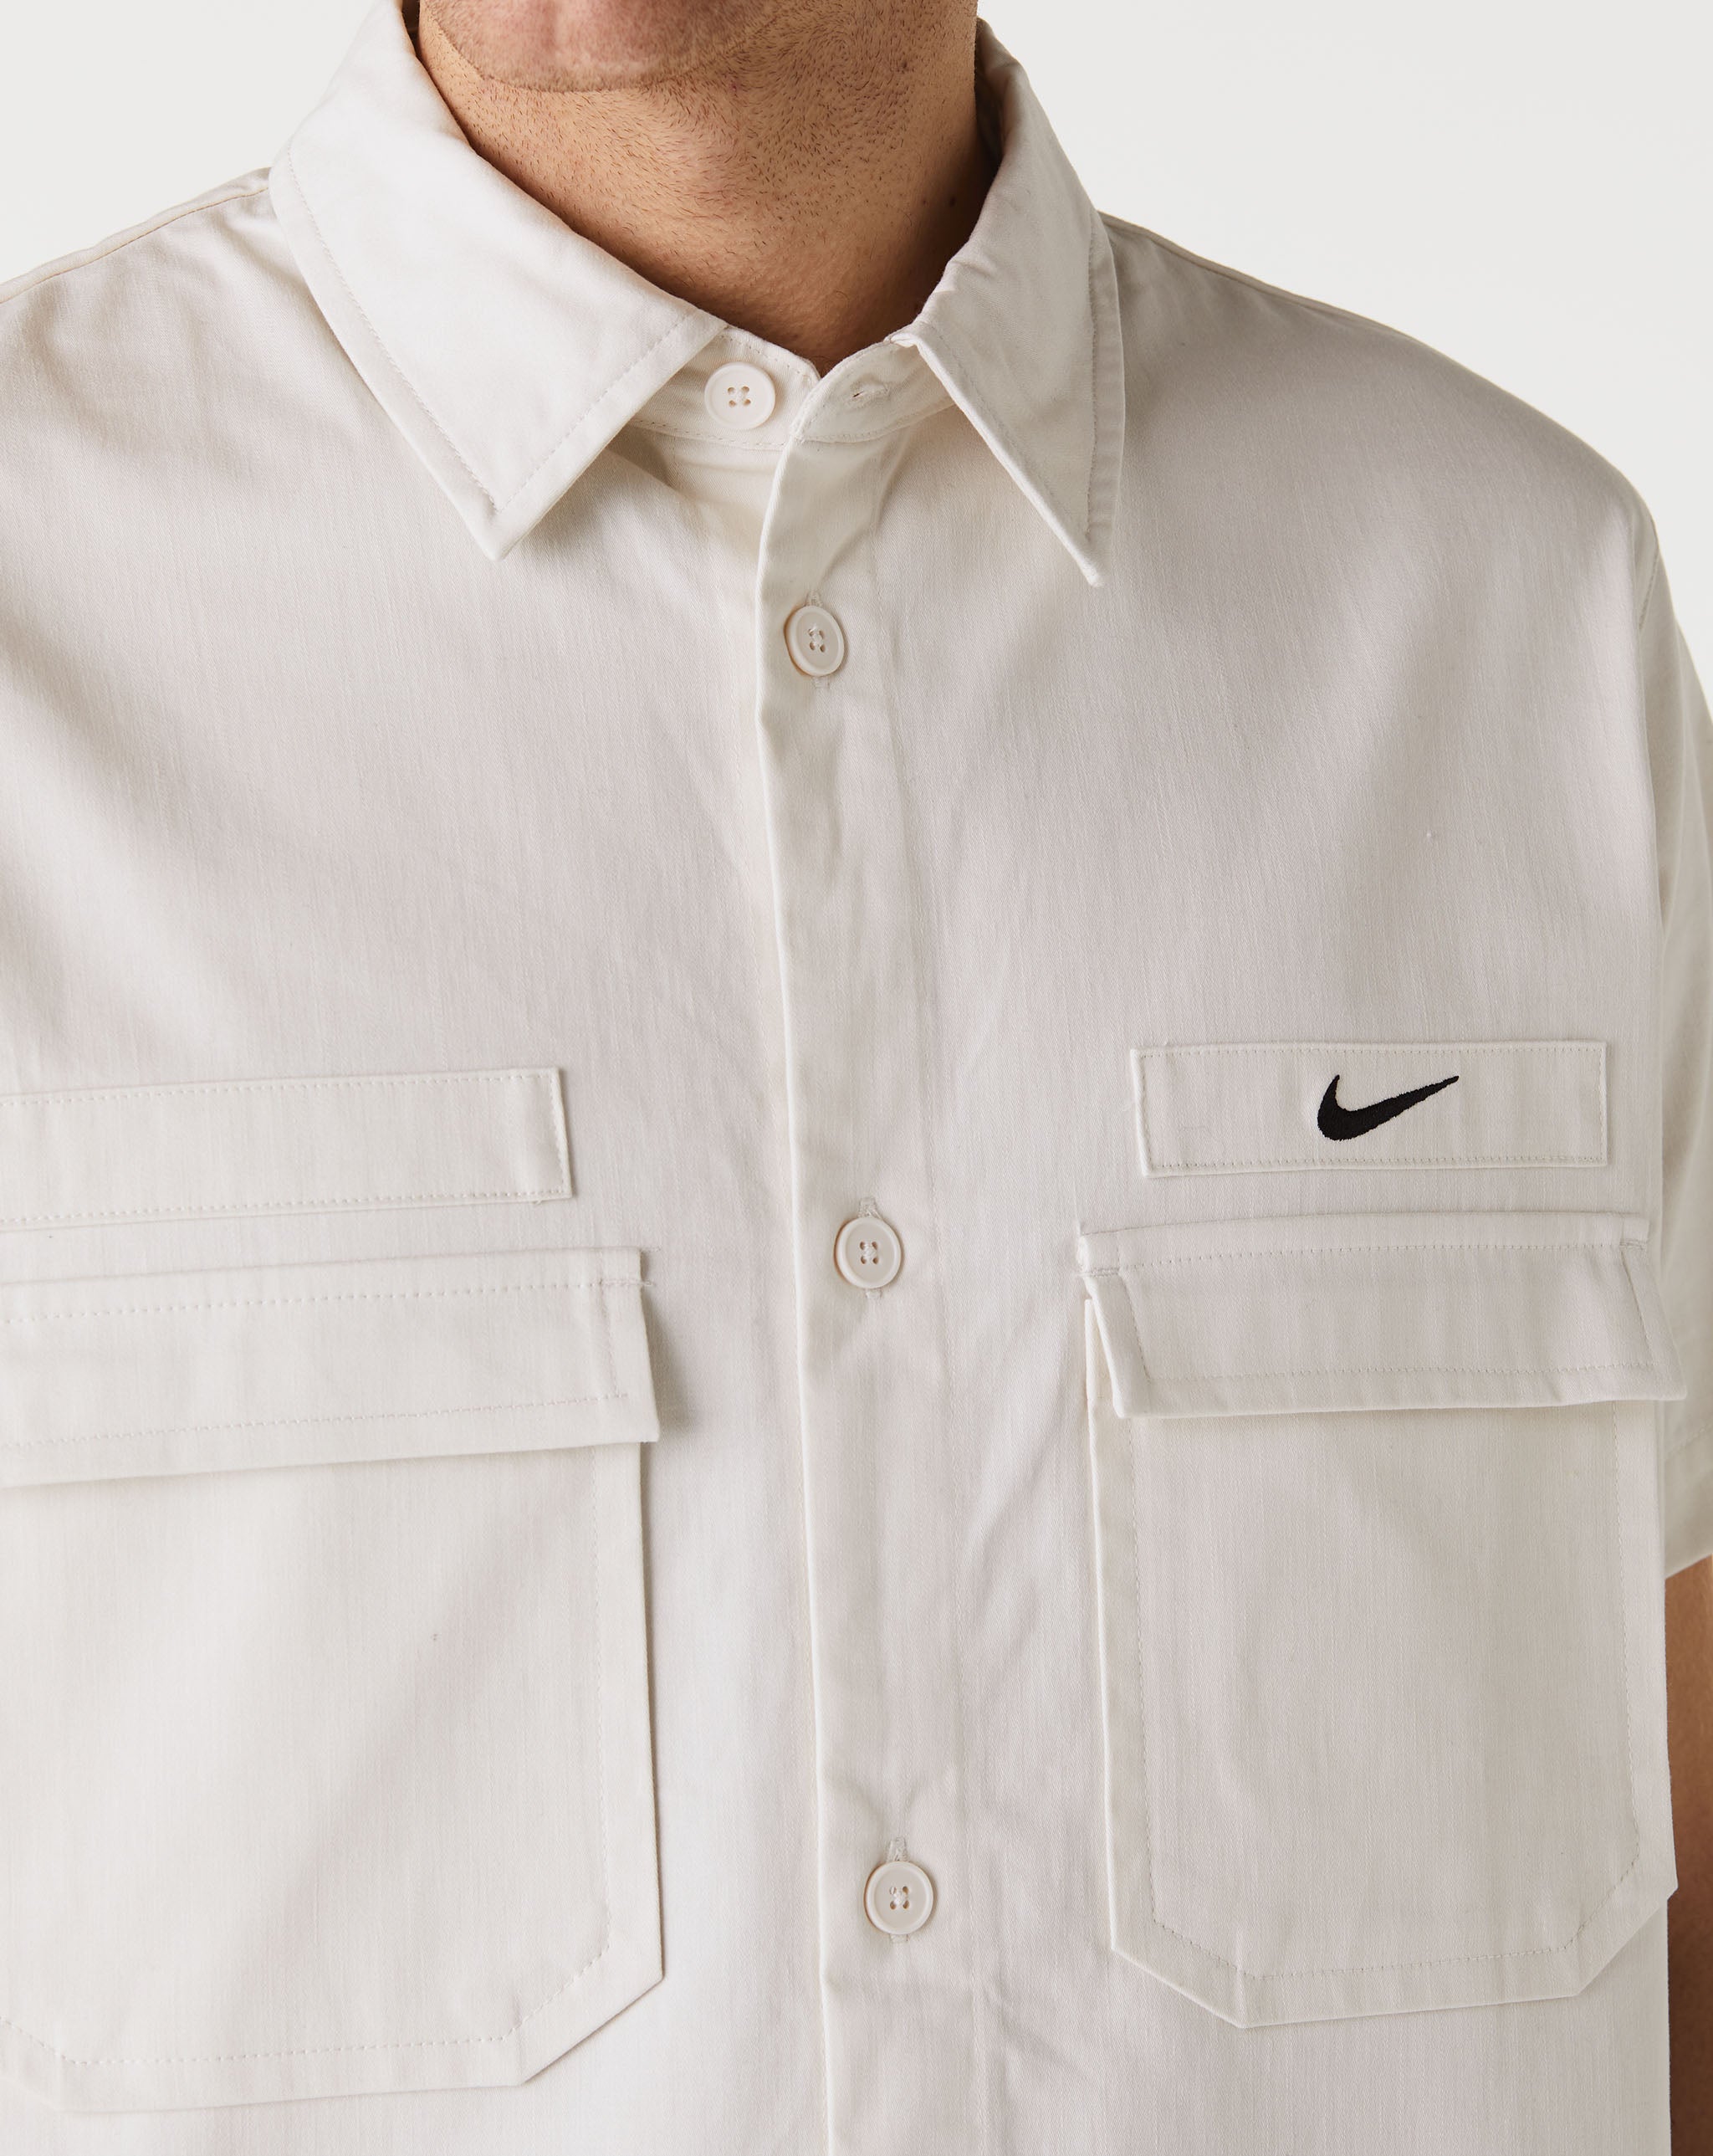 Nike Woven Military Shirt  - XHIBITION